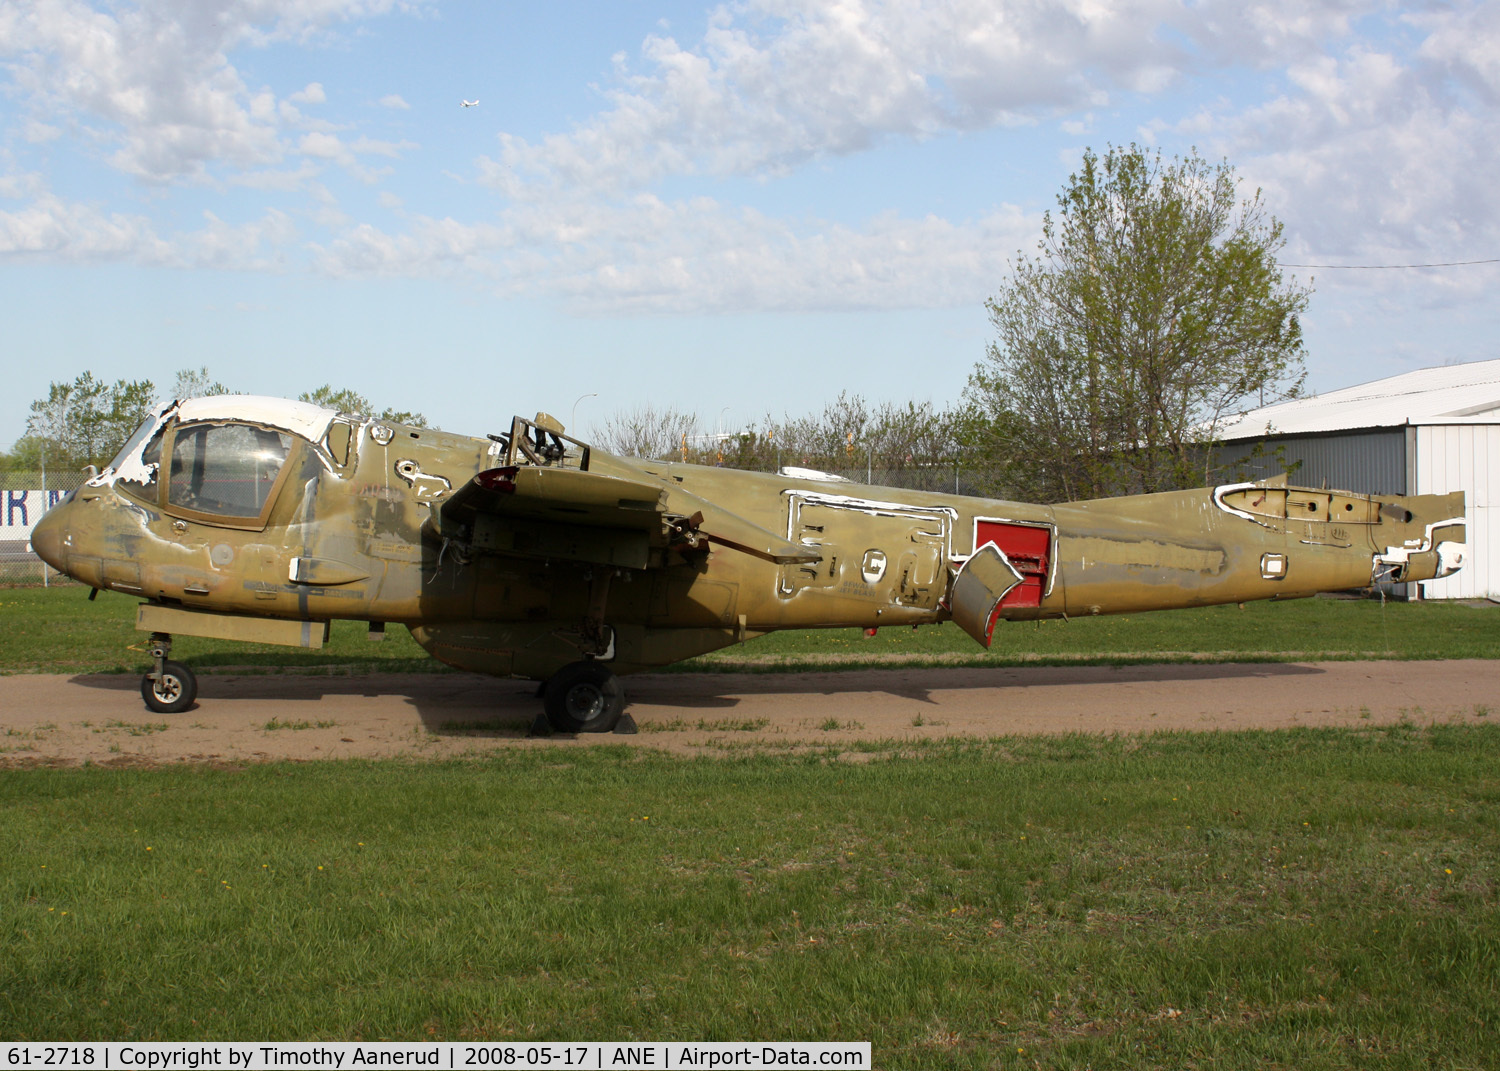 61-2718, 1961 Grumman OV-1C Mohawk C/N 61C, Gruman JOV-1C Mohawk, American Wings Museum, 61-2178, stored on the south end of the field